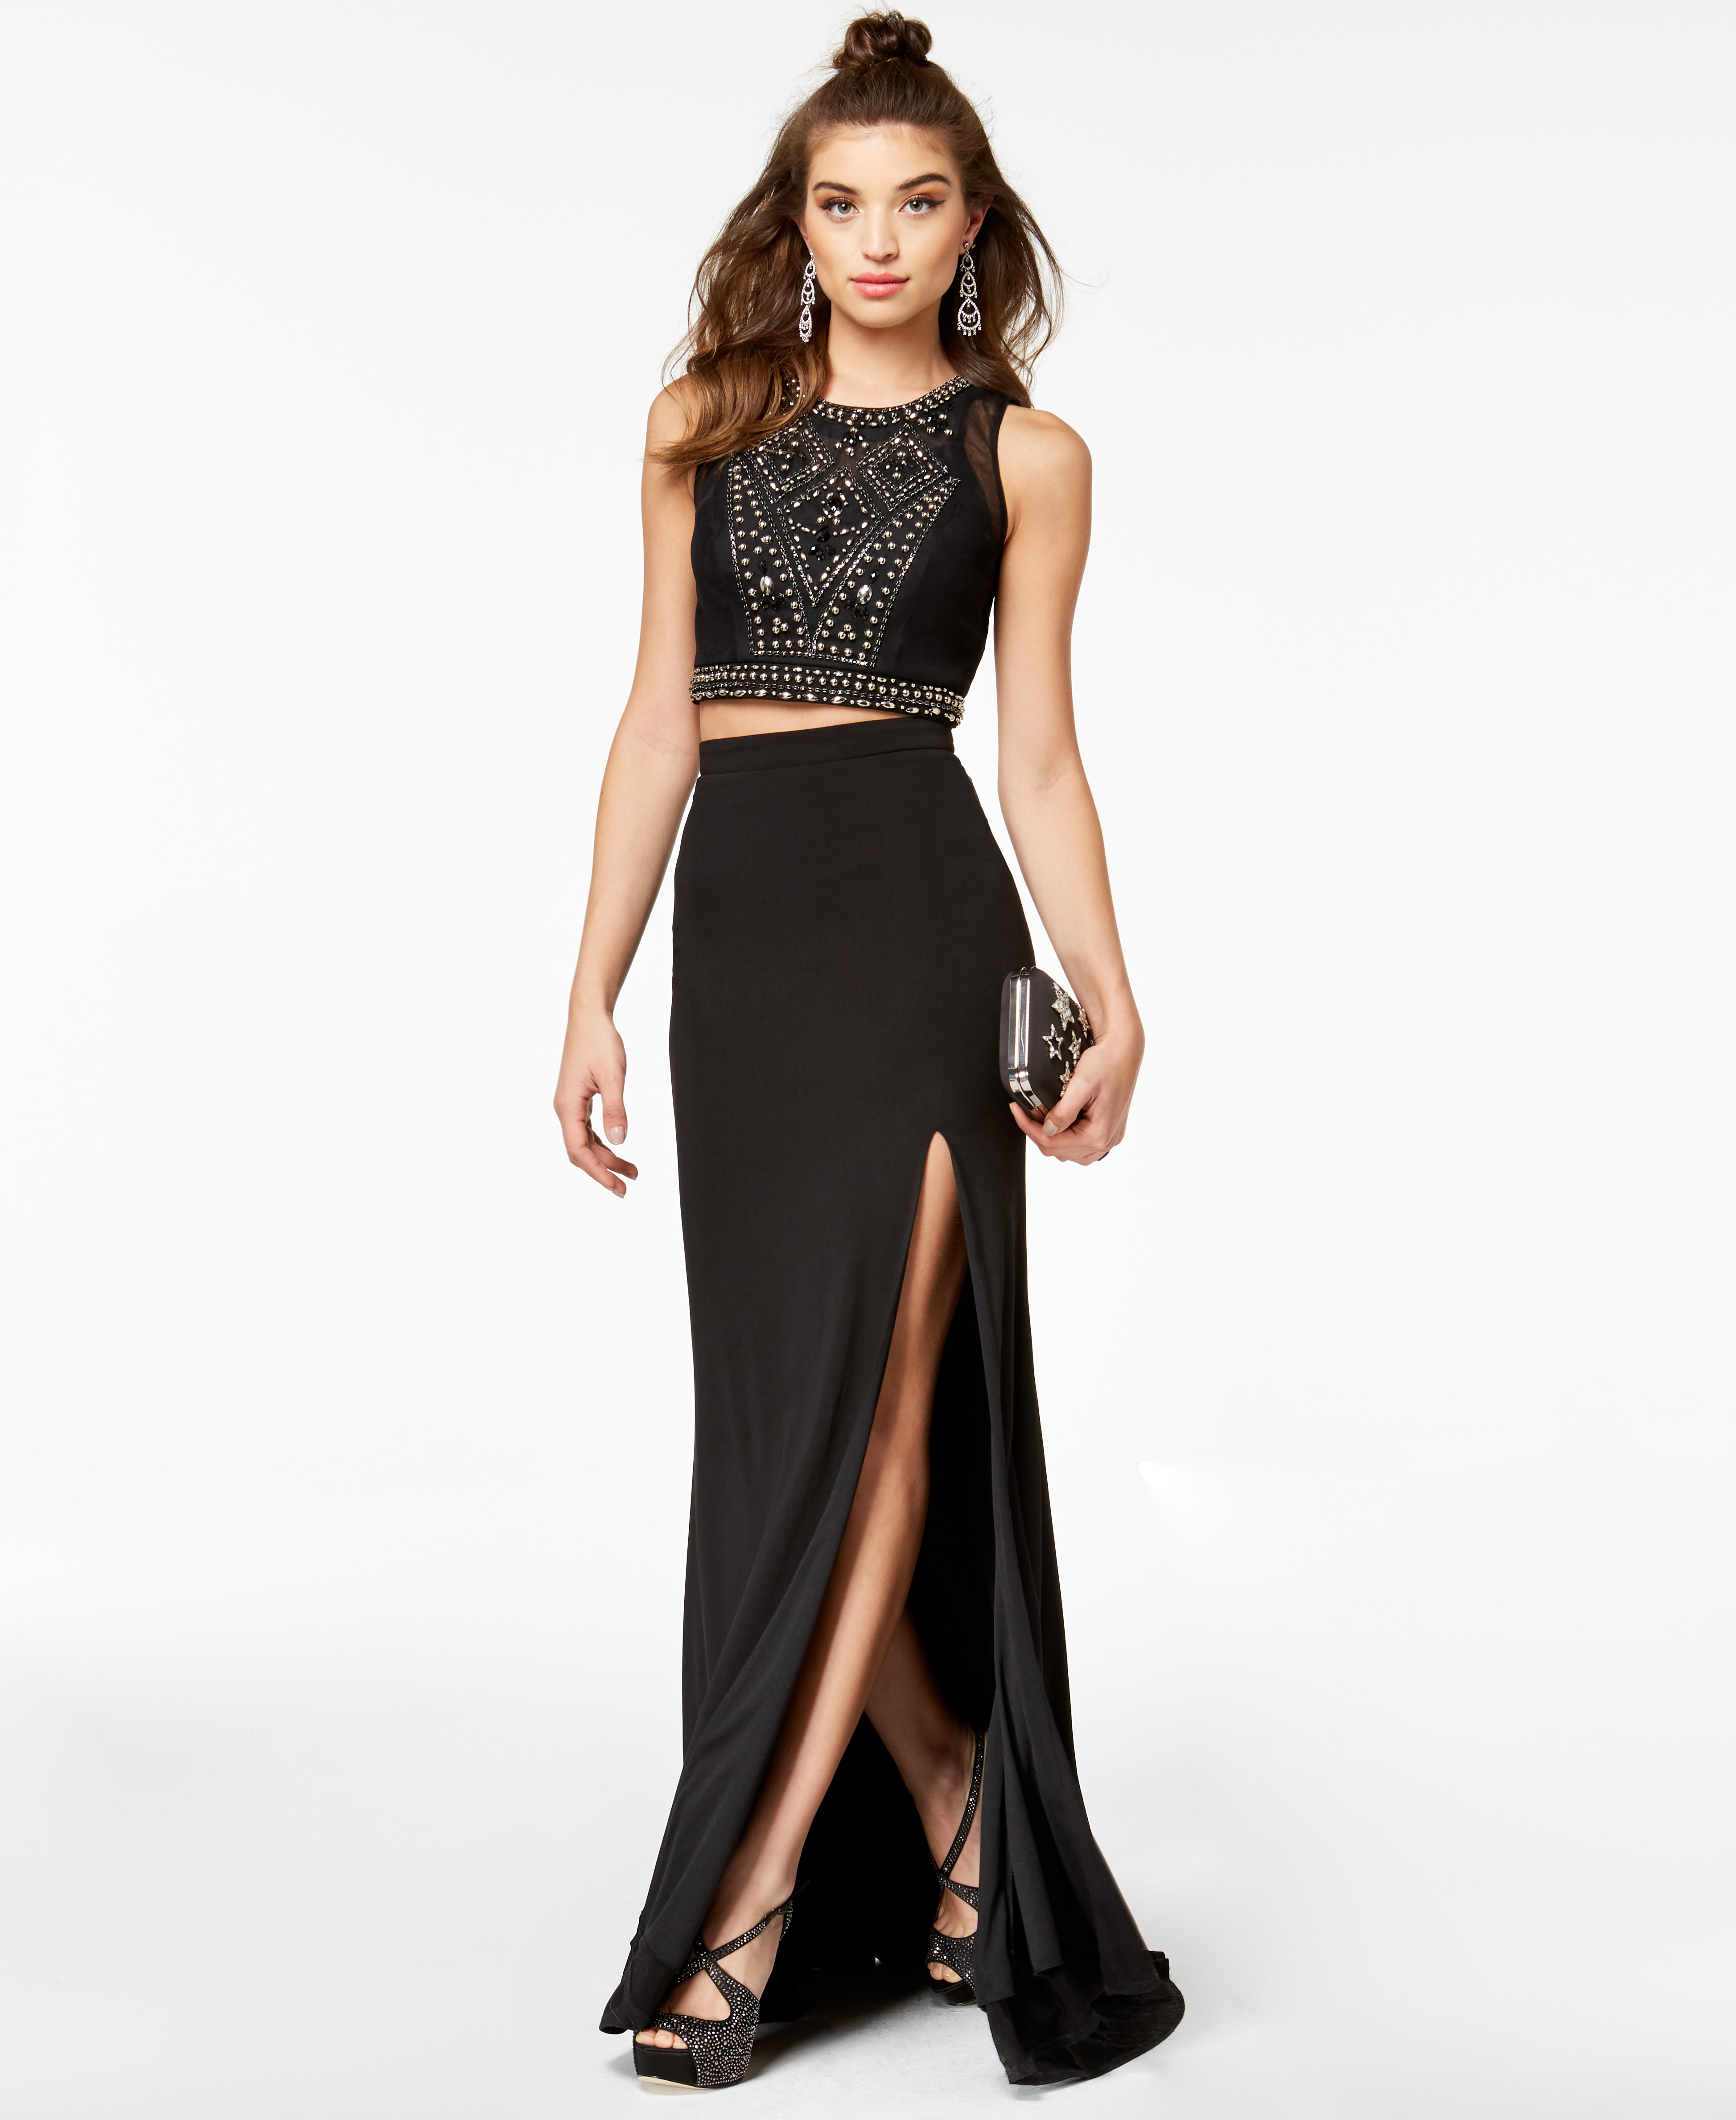 macy’s formal dresses for weddings | Dresses Images 2022